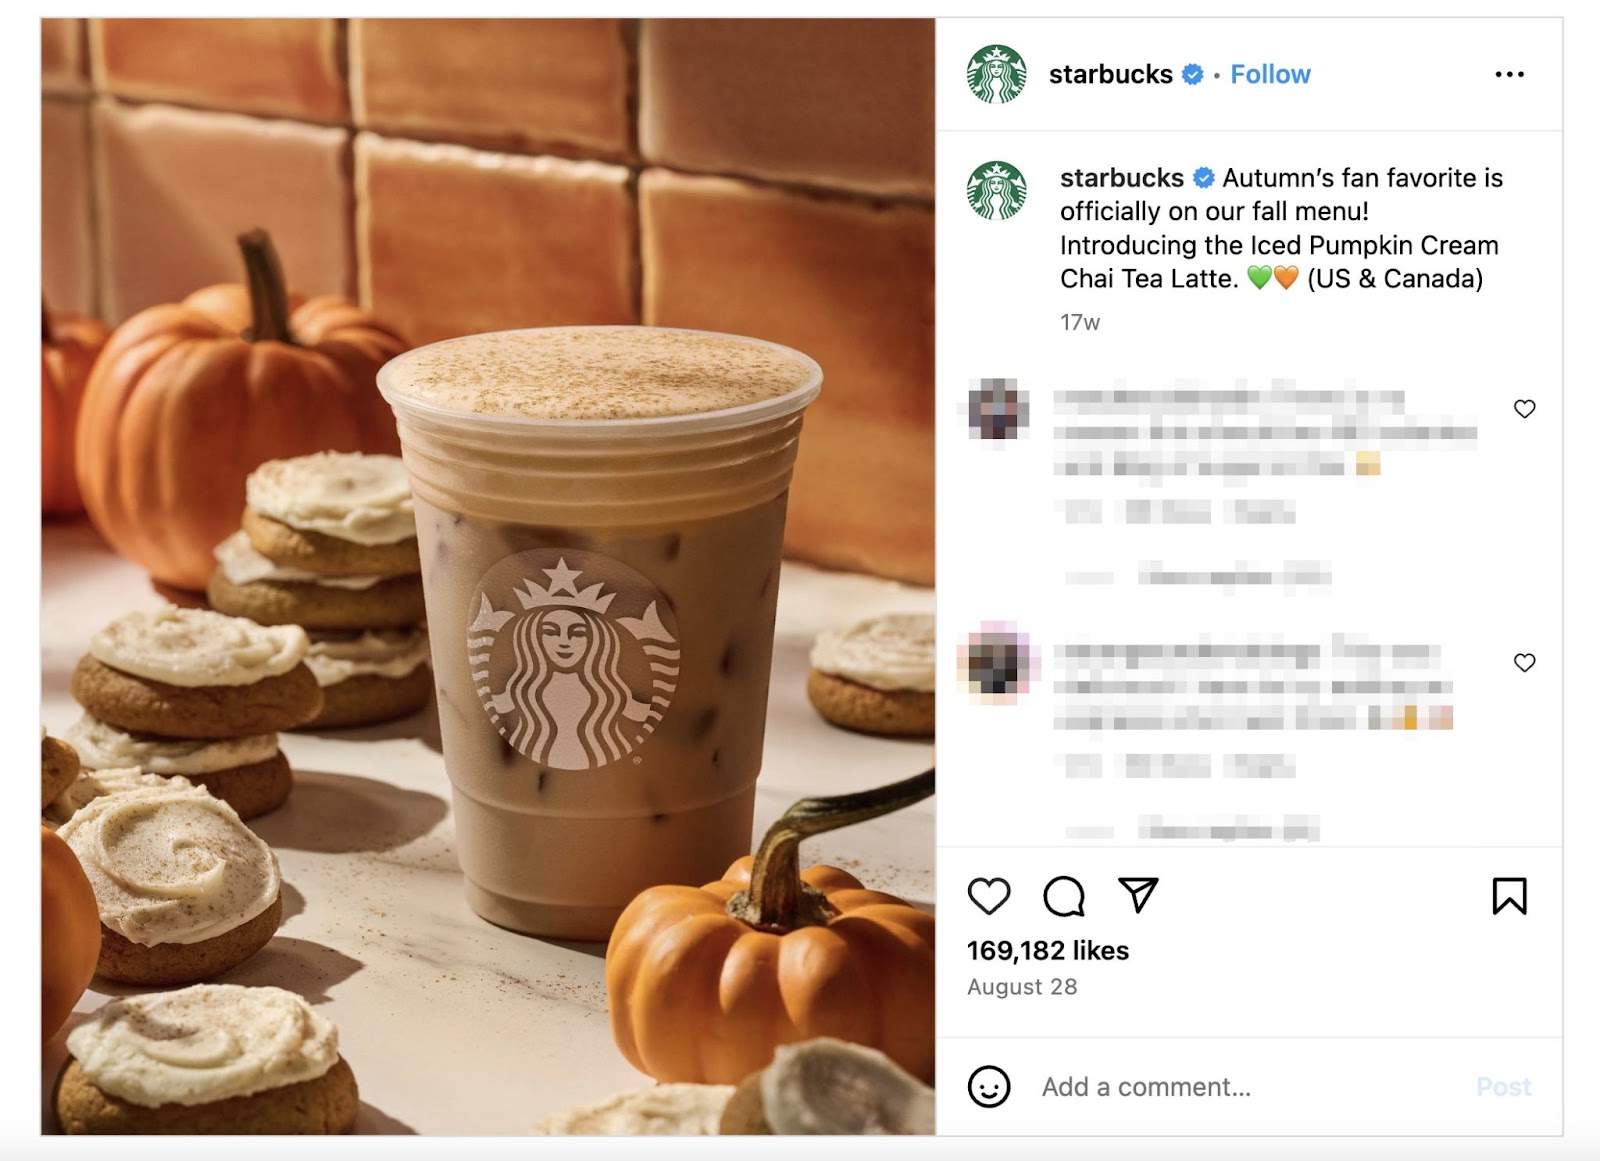 Starbucks's Instagram post announcing the new Iced Pumpkin Cream Chai Tea Latte